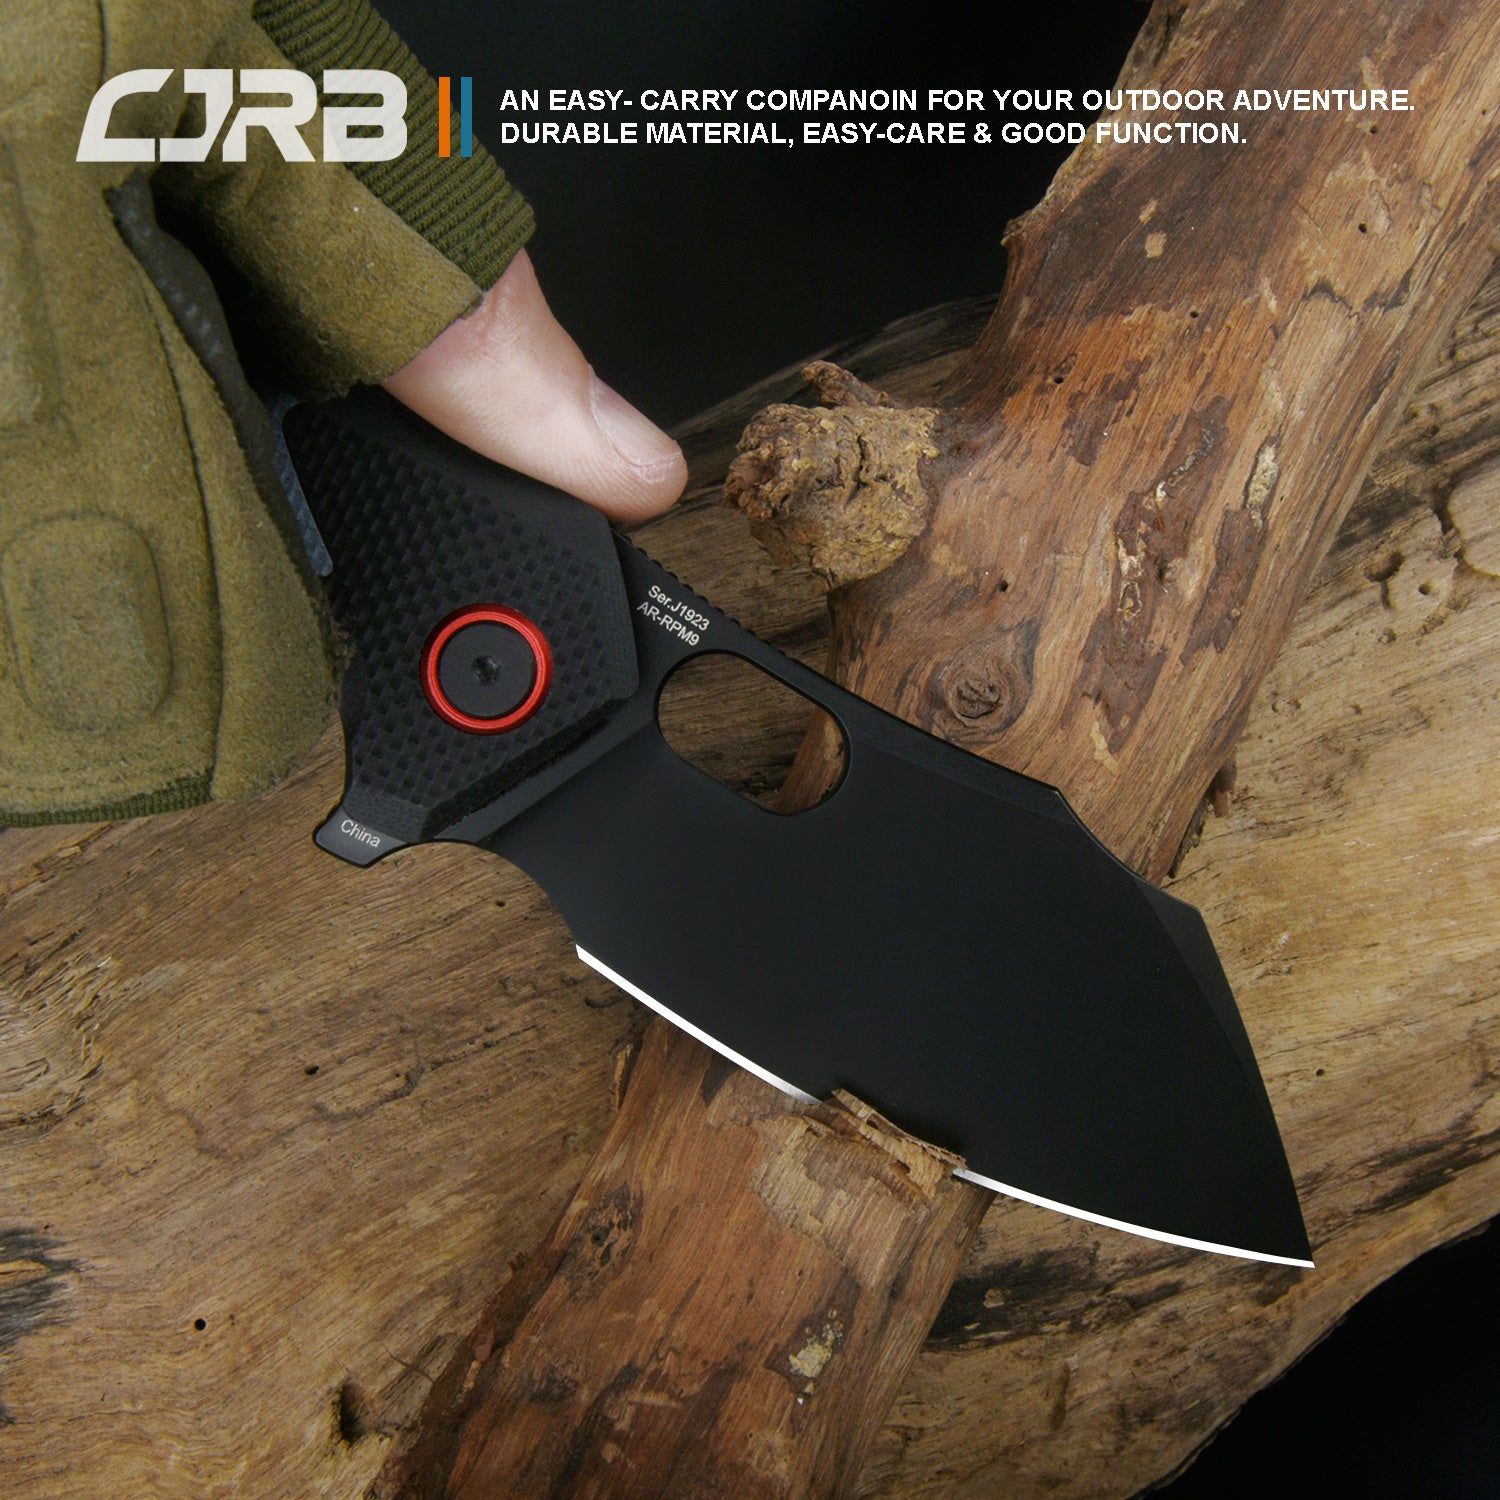 CJRB Caldera J1923 AR-RPM9 POWDER STEEL BLADE G10 HANDLE FOLDING KNIVES